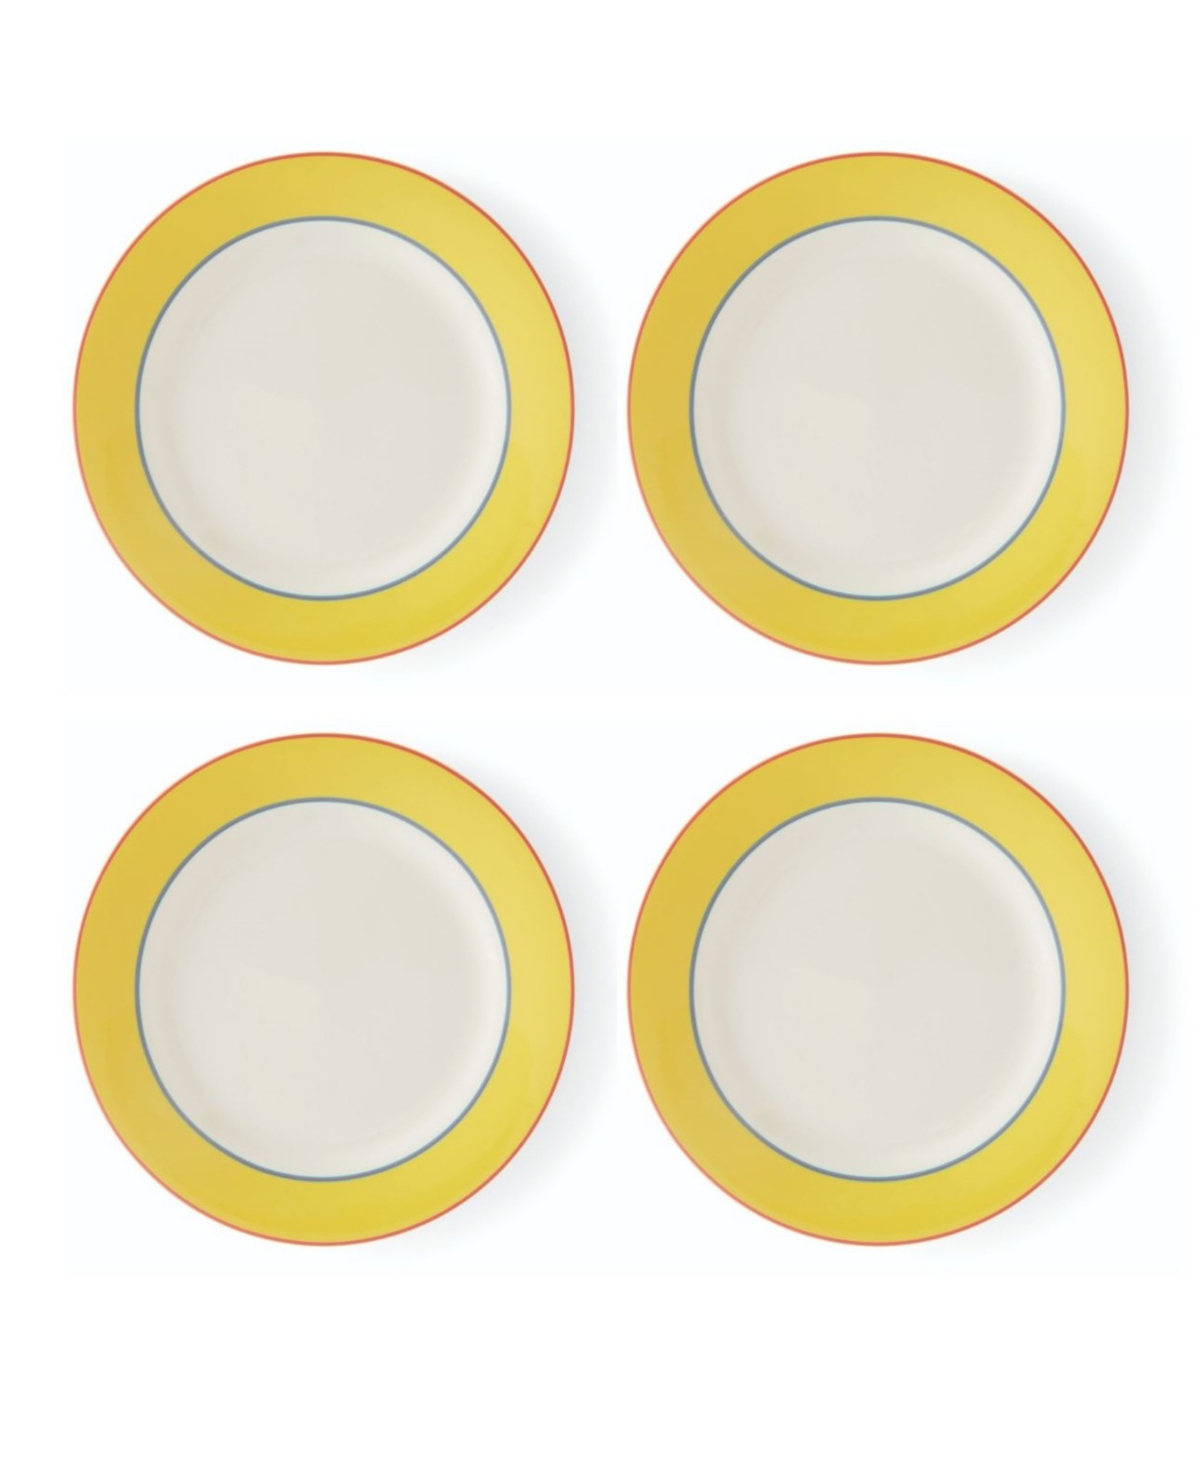 Calypso 4 Piece Dinner Plates Set, Service for 4 - Yellow